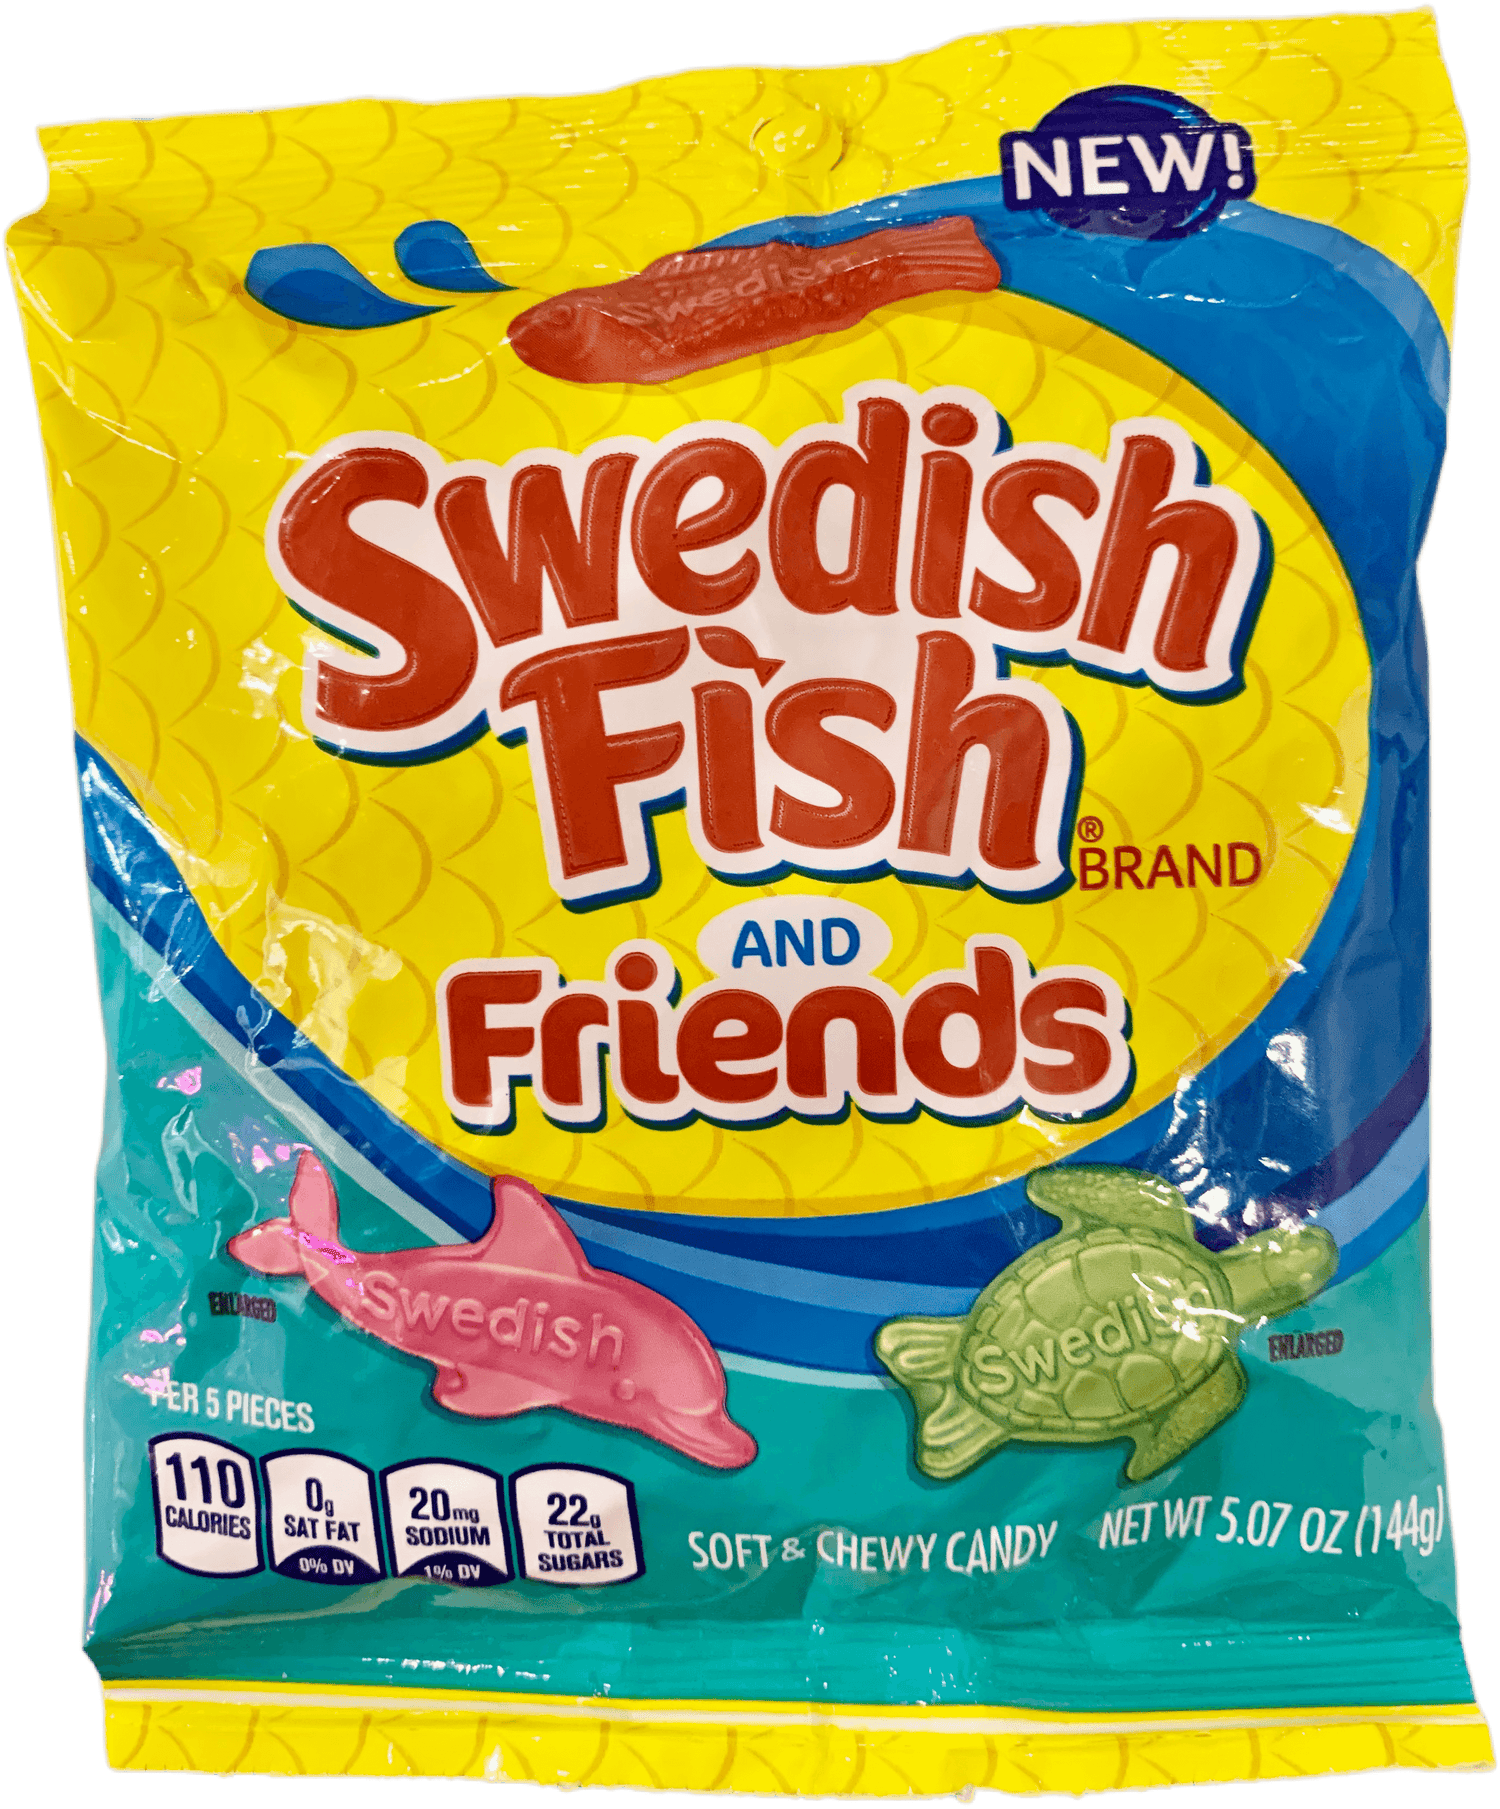 Swedish Fish and Friends